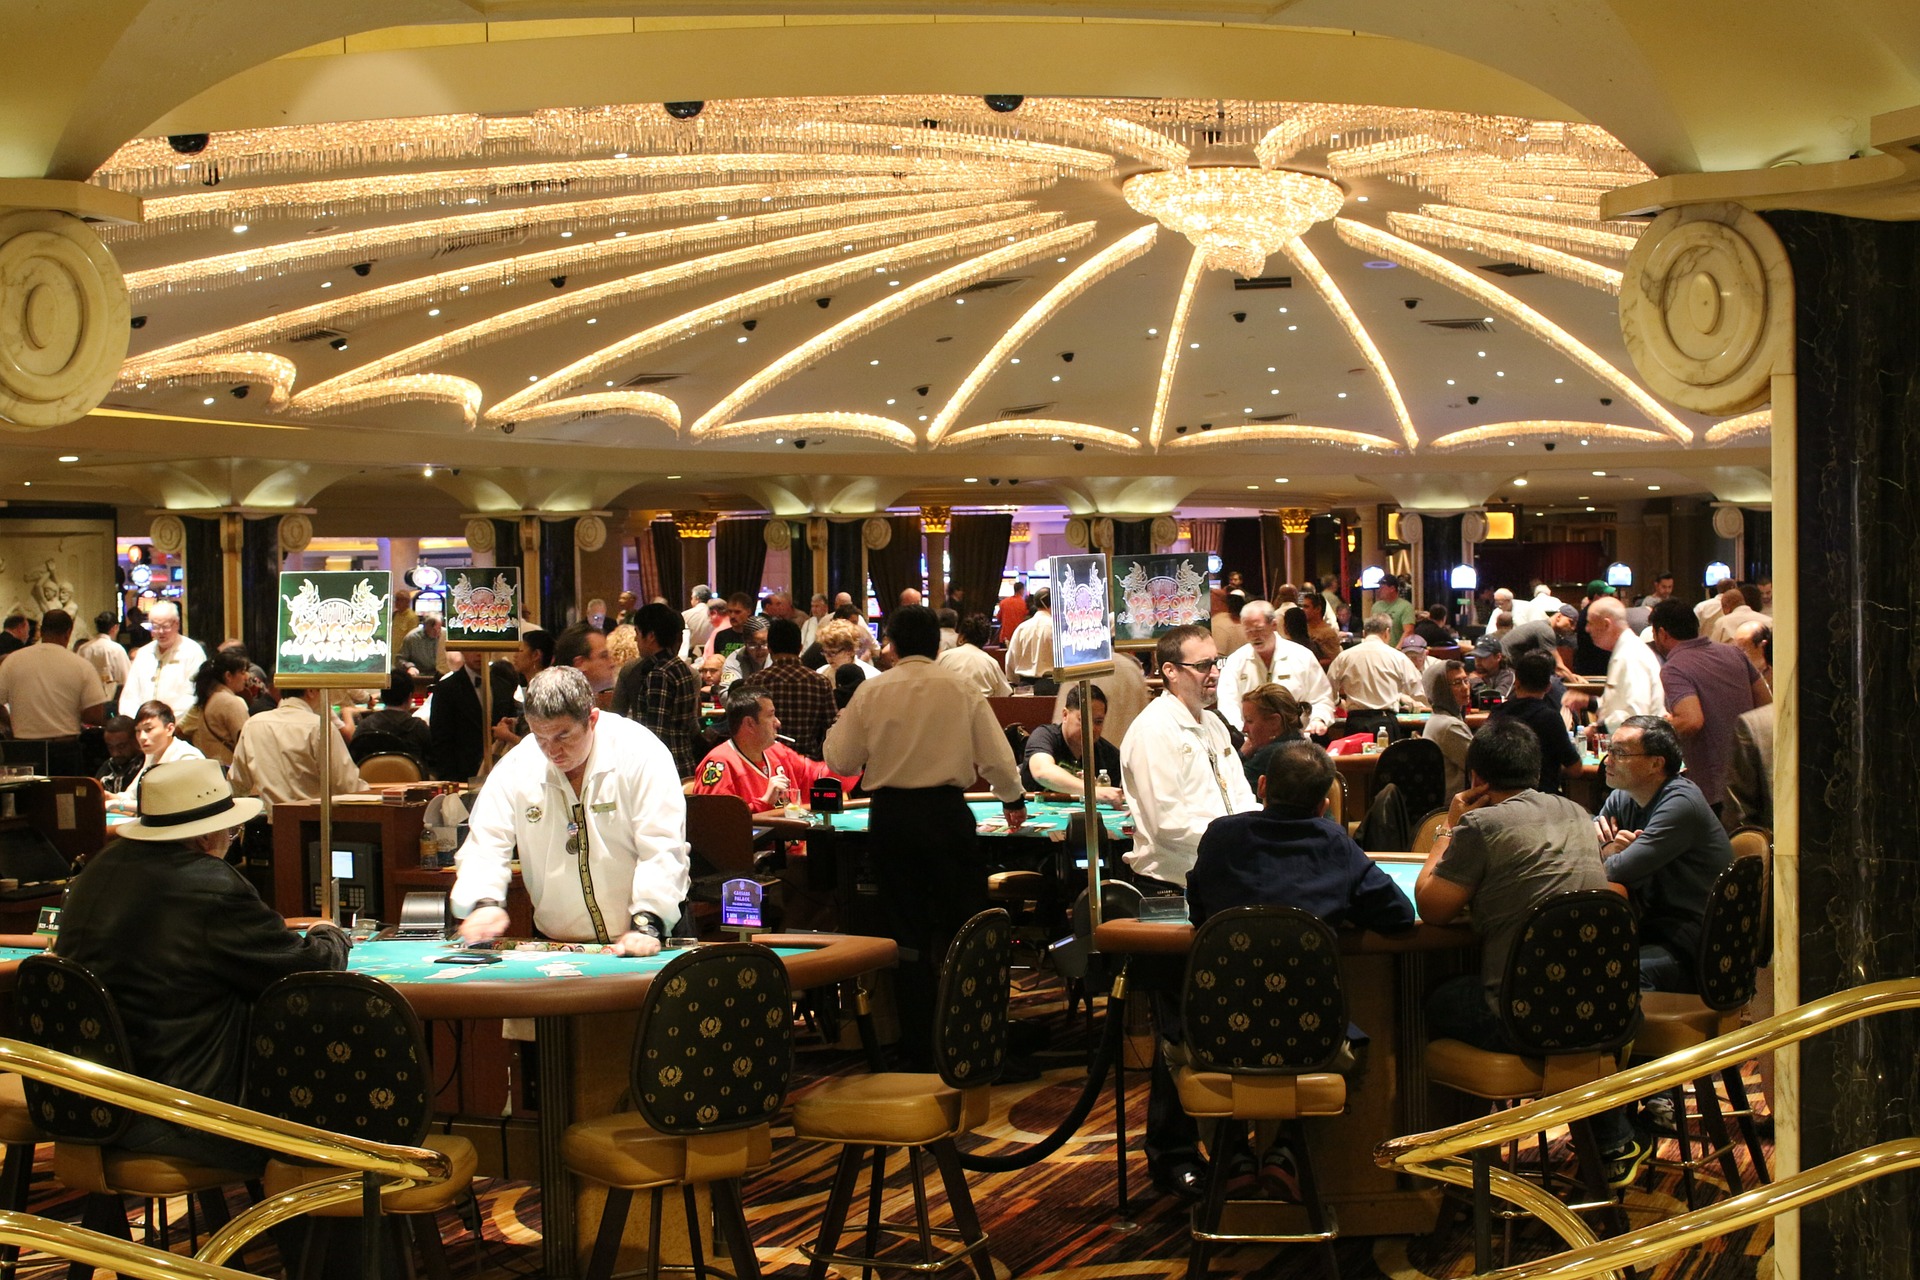 inside a popular casino location